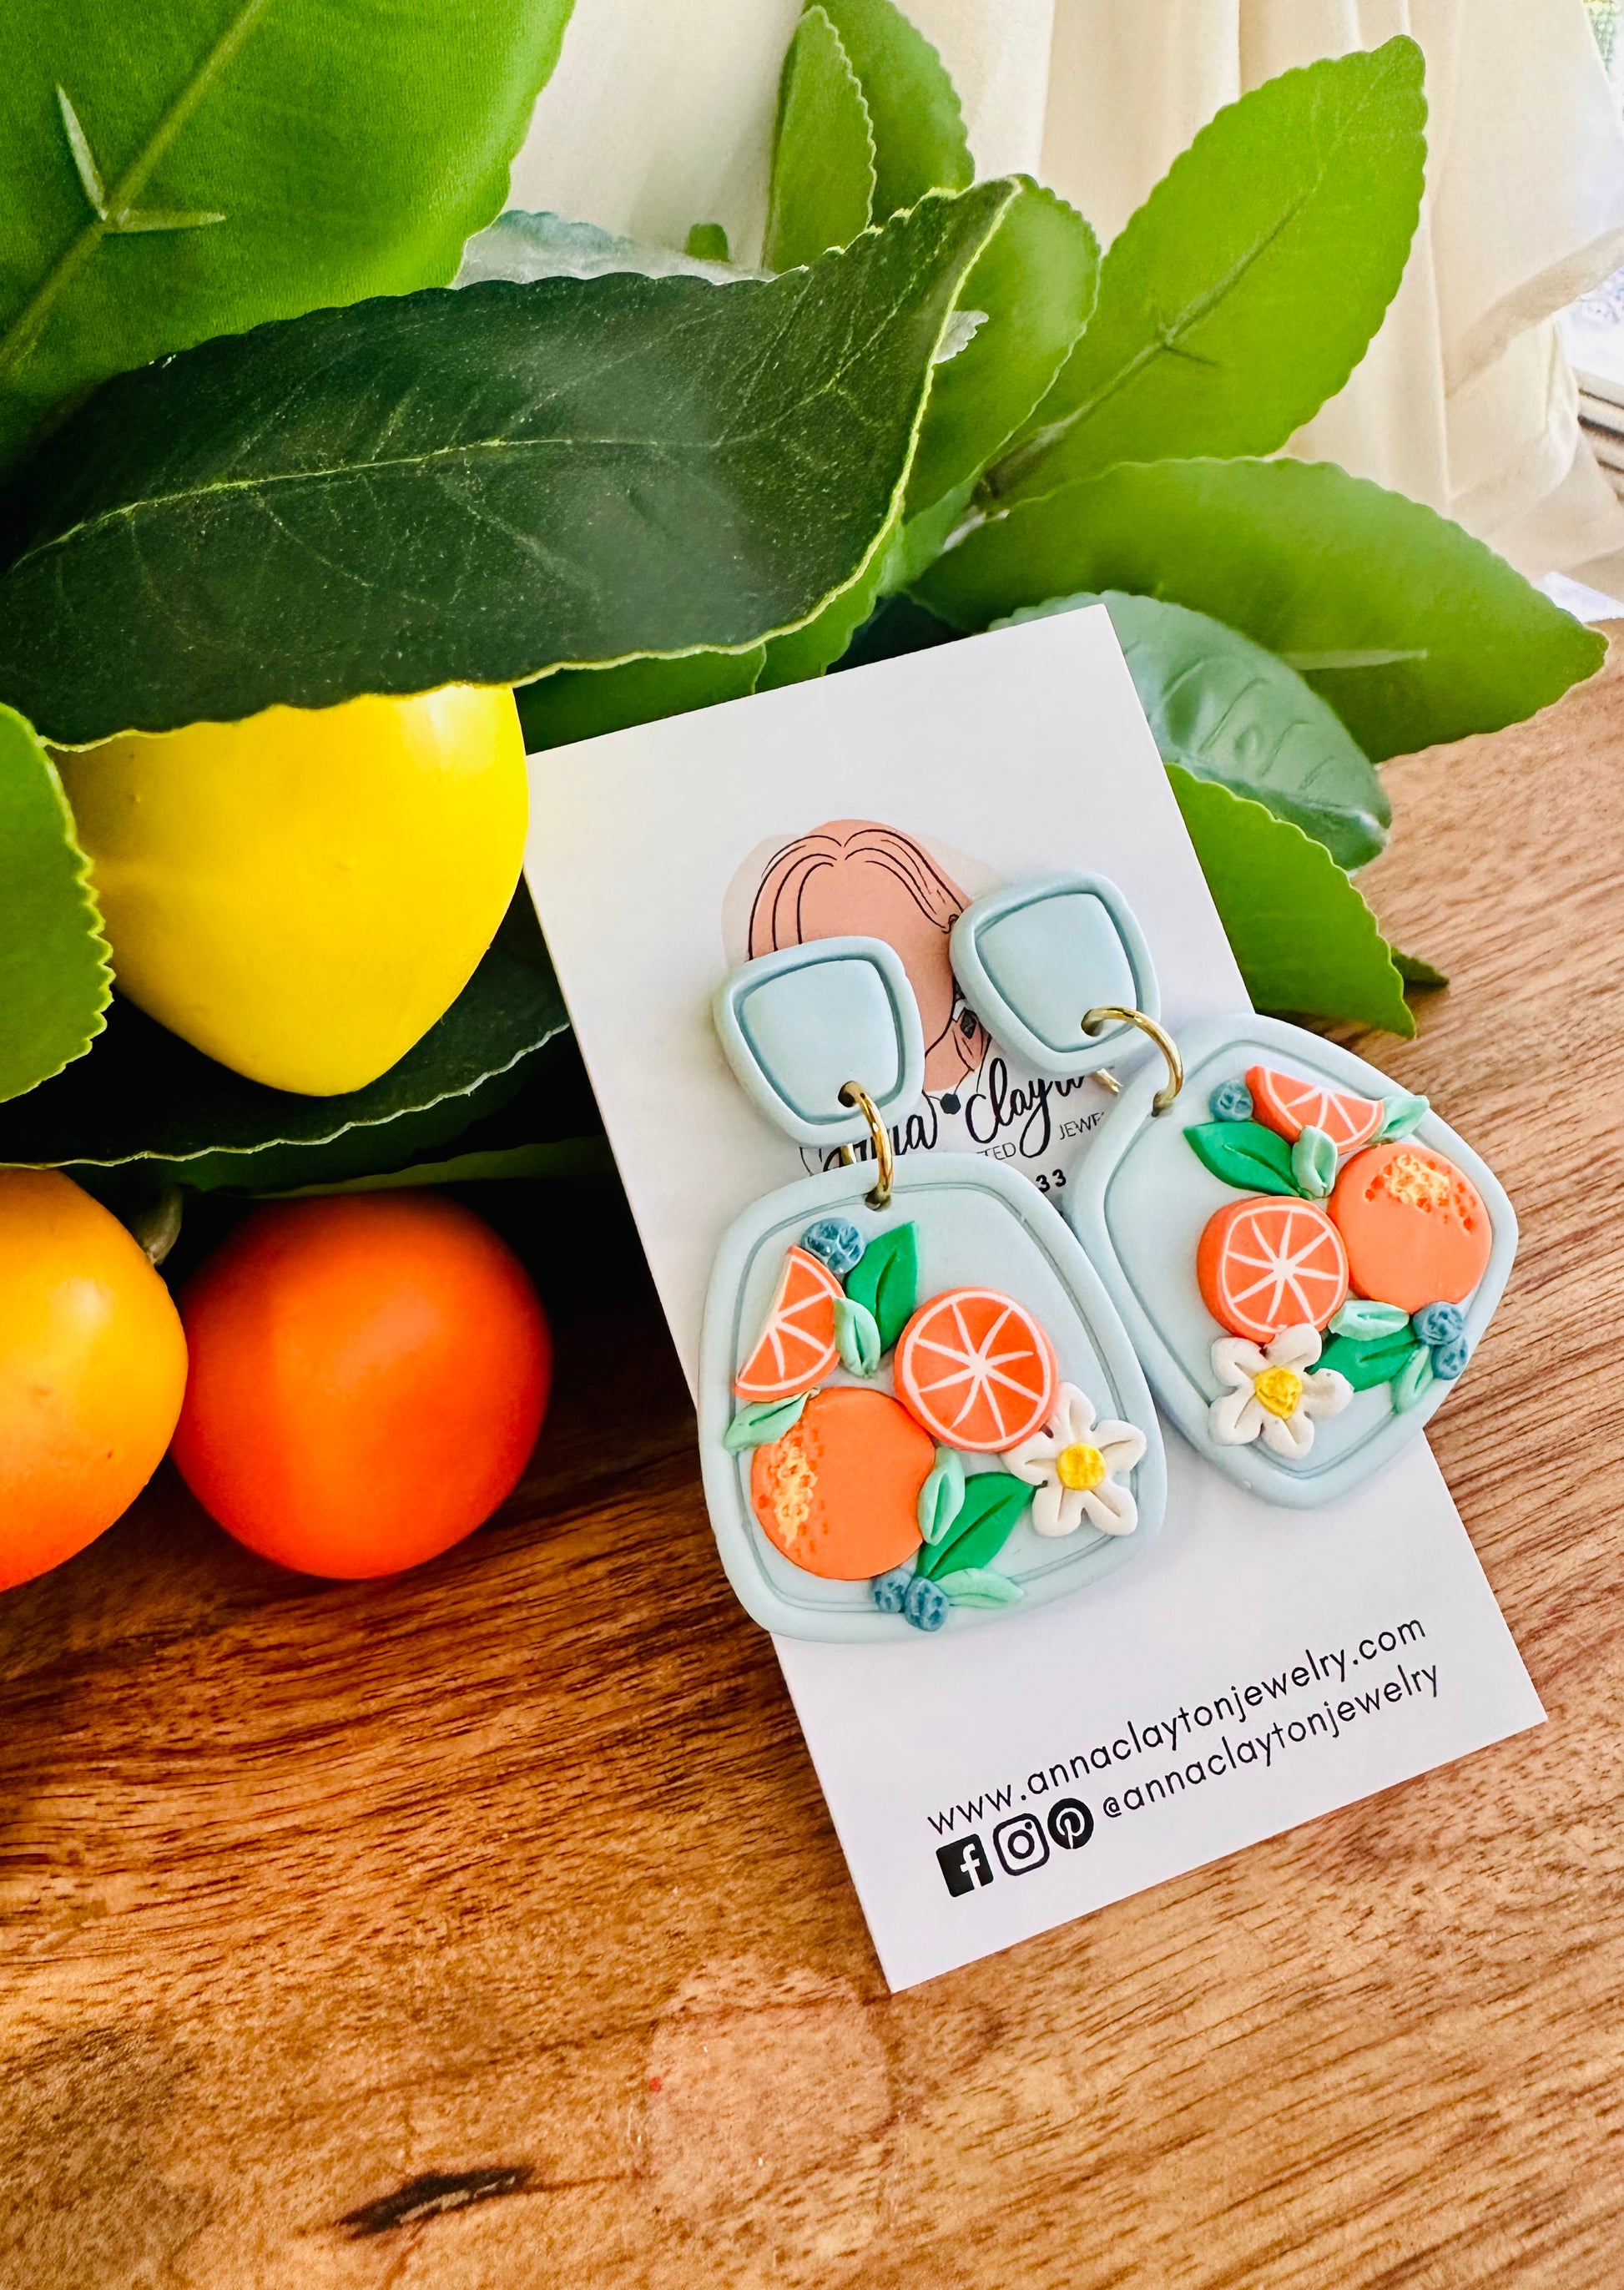 Polymer Clay Earrings | light weight | statement earrings | handmade | boho  | floral